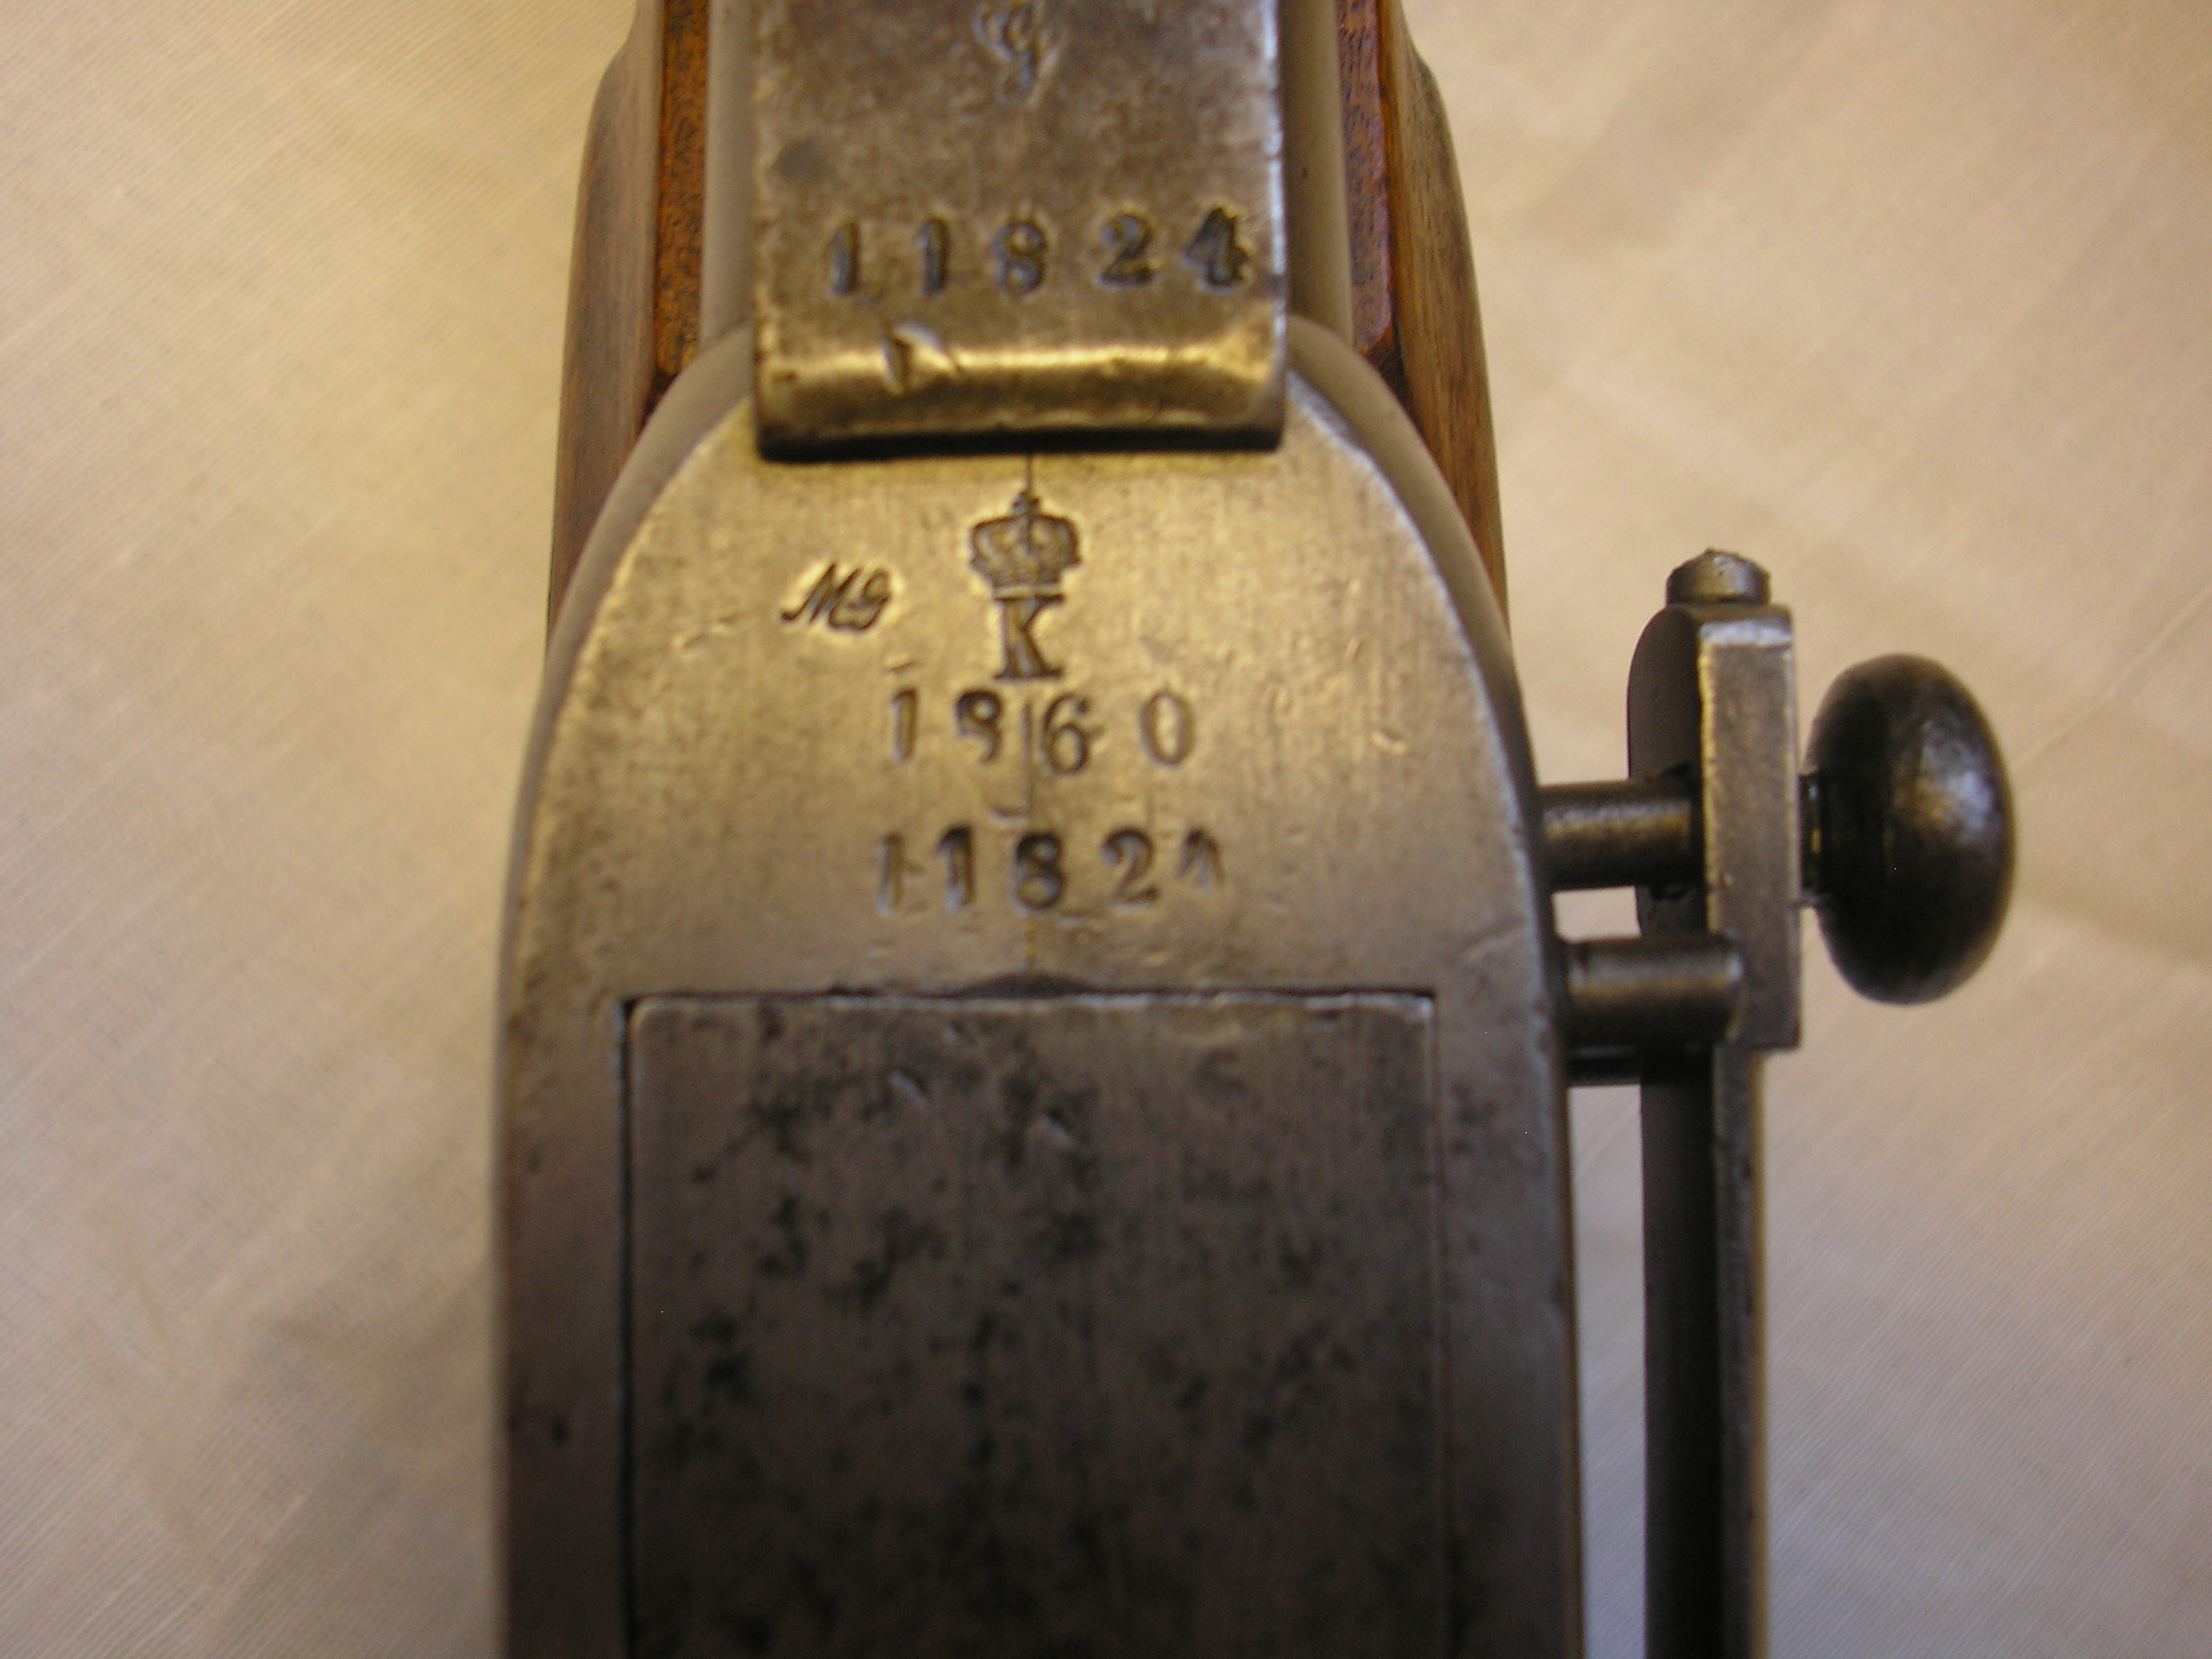 ./guns/rifle/bilder/Rifle-Kongsberg-Kammerlader-M1859-11824-6.JPG